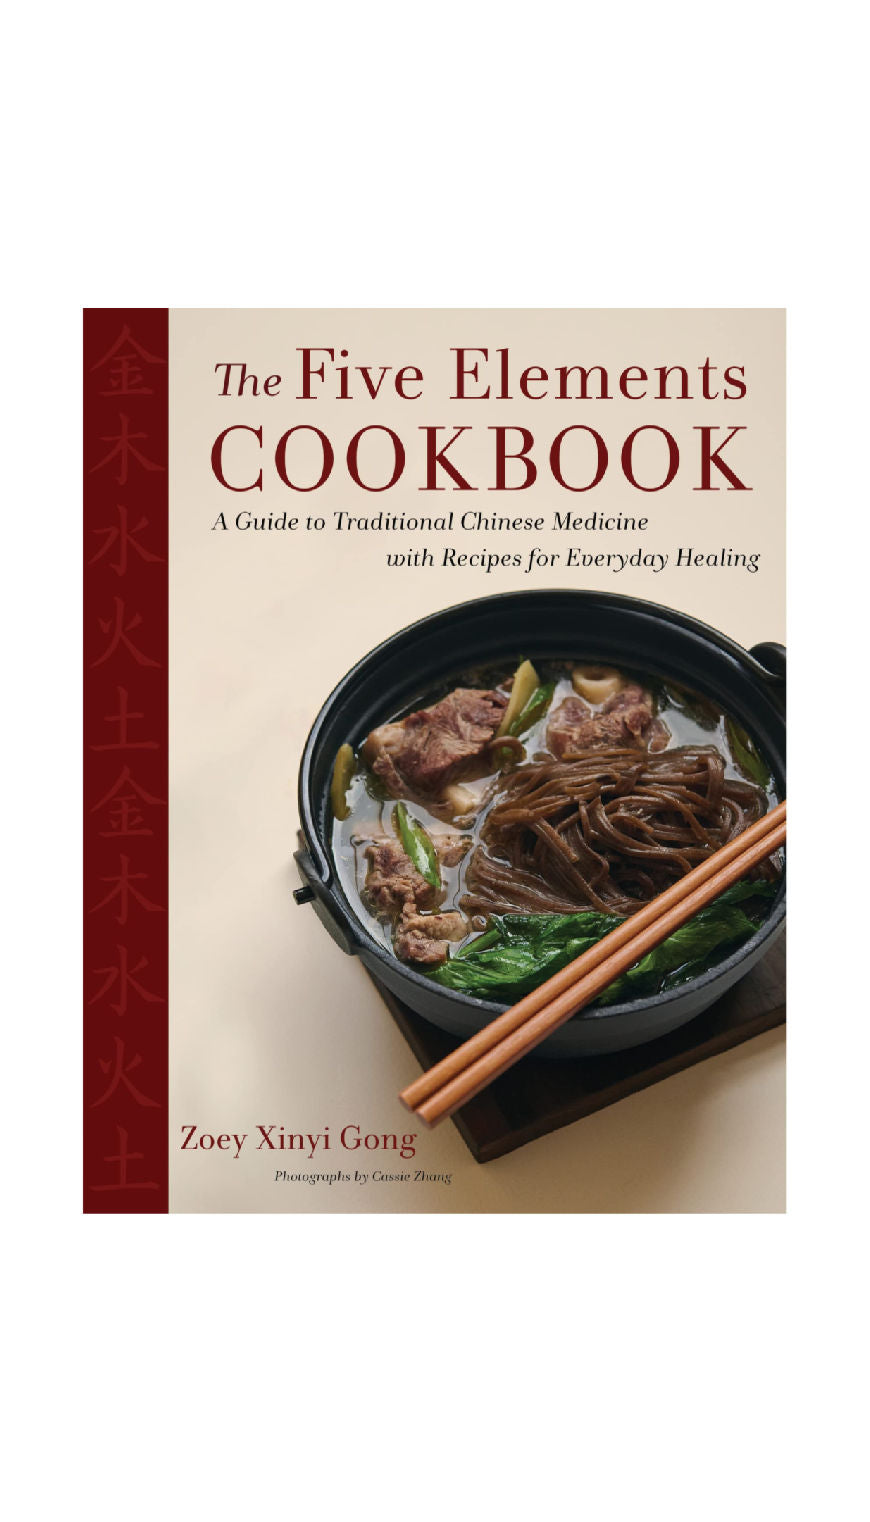 The Five Elements Cookbook